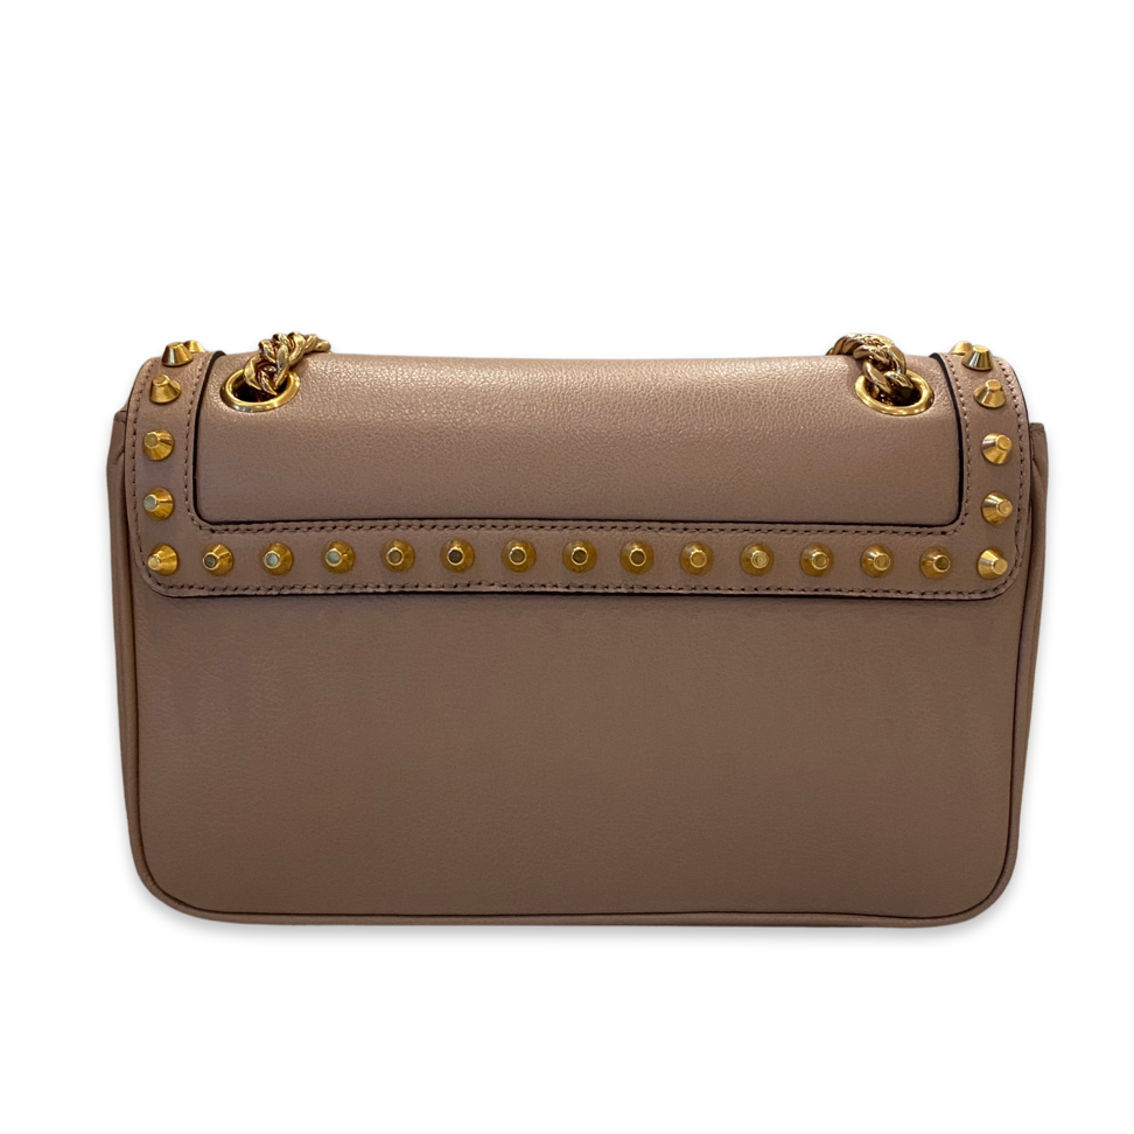 Prada Pattina Glace Calf Leather Cammeo Beige Gold Studded Bag ...